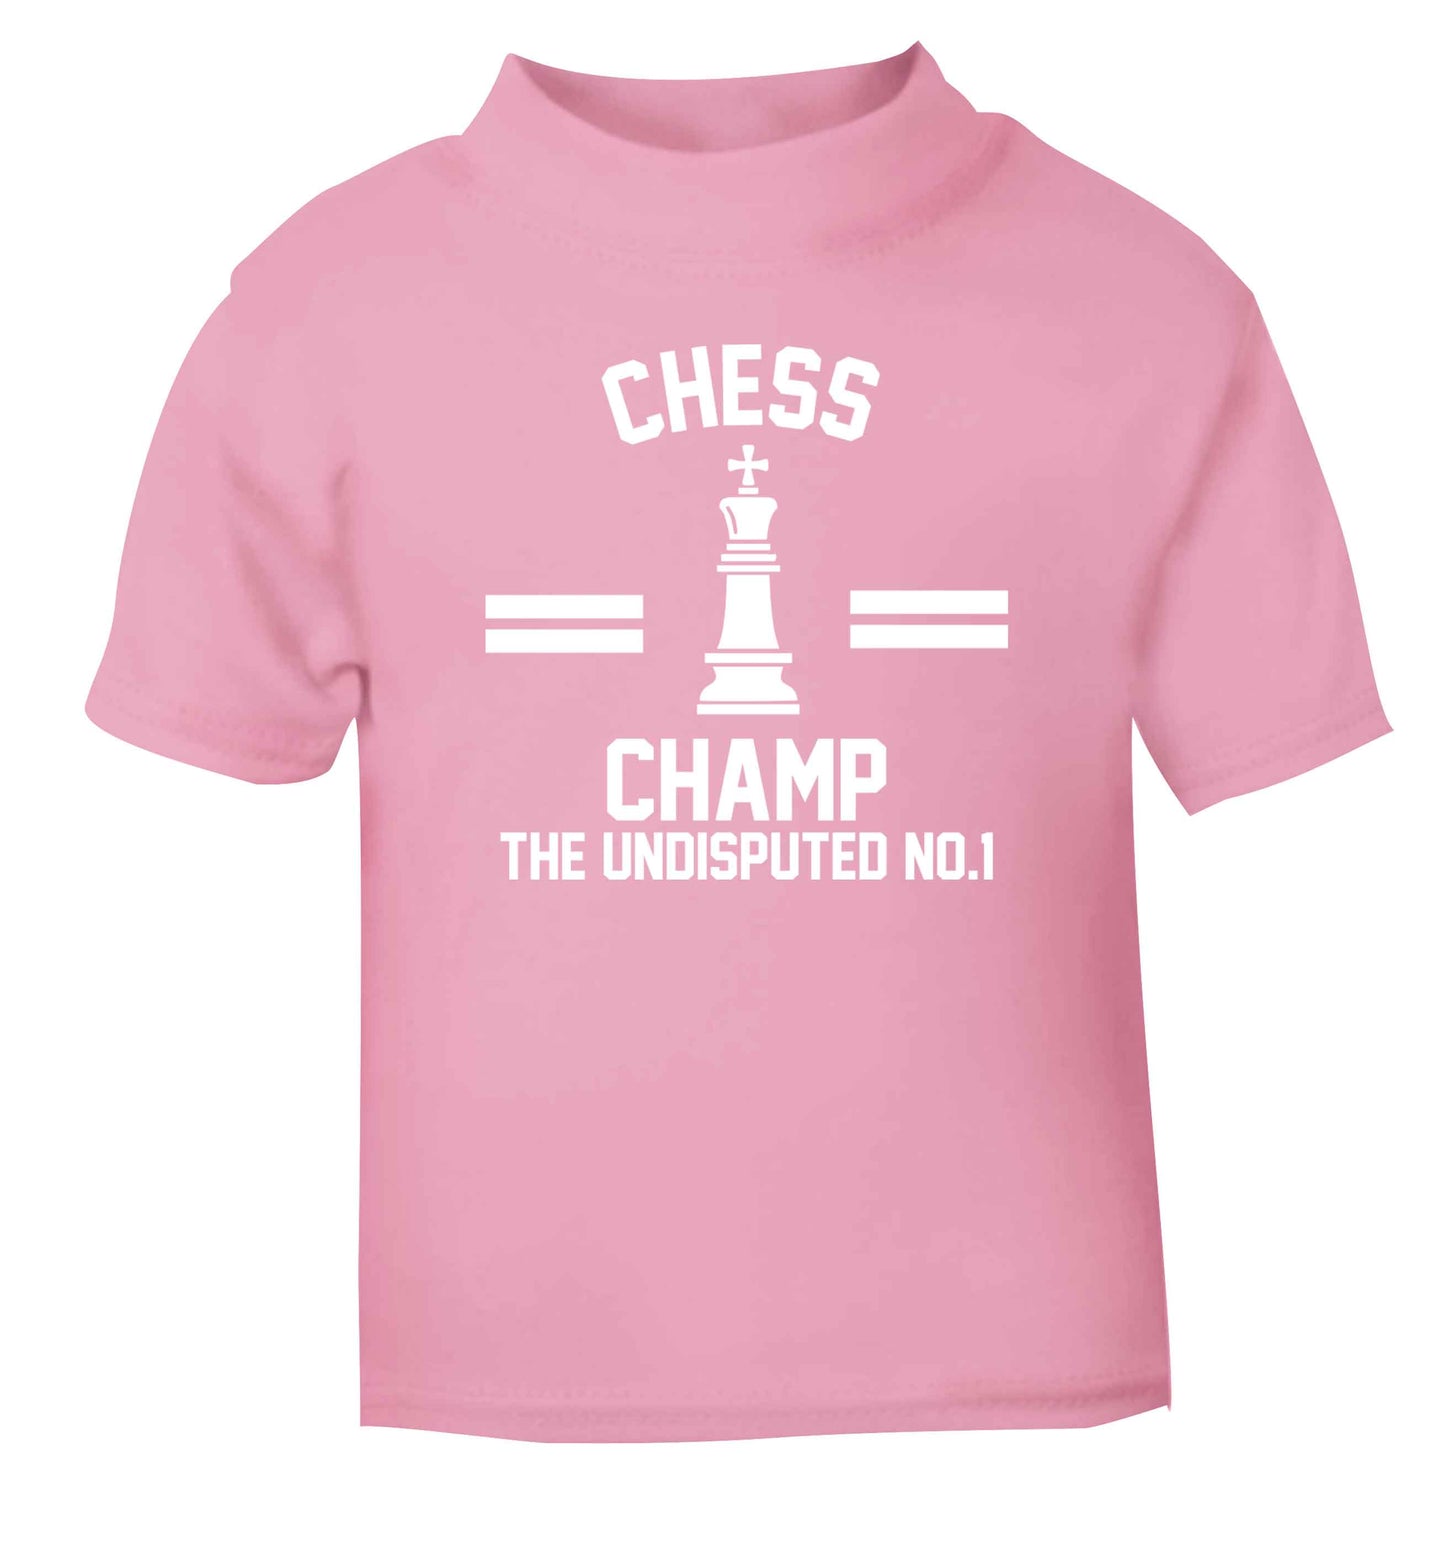 Undisputed chess championship no.1  light pink Baby Toddler Tshirt 2 Years